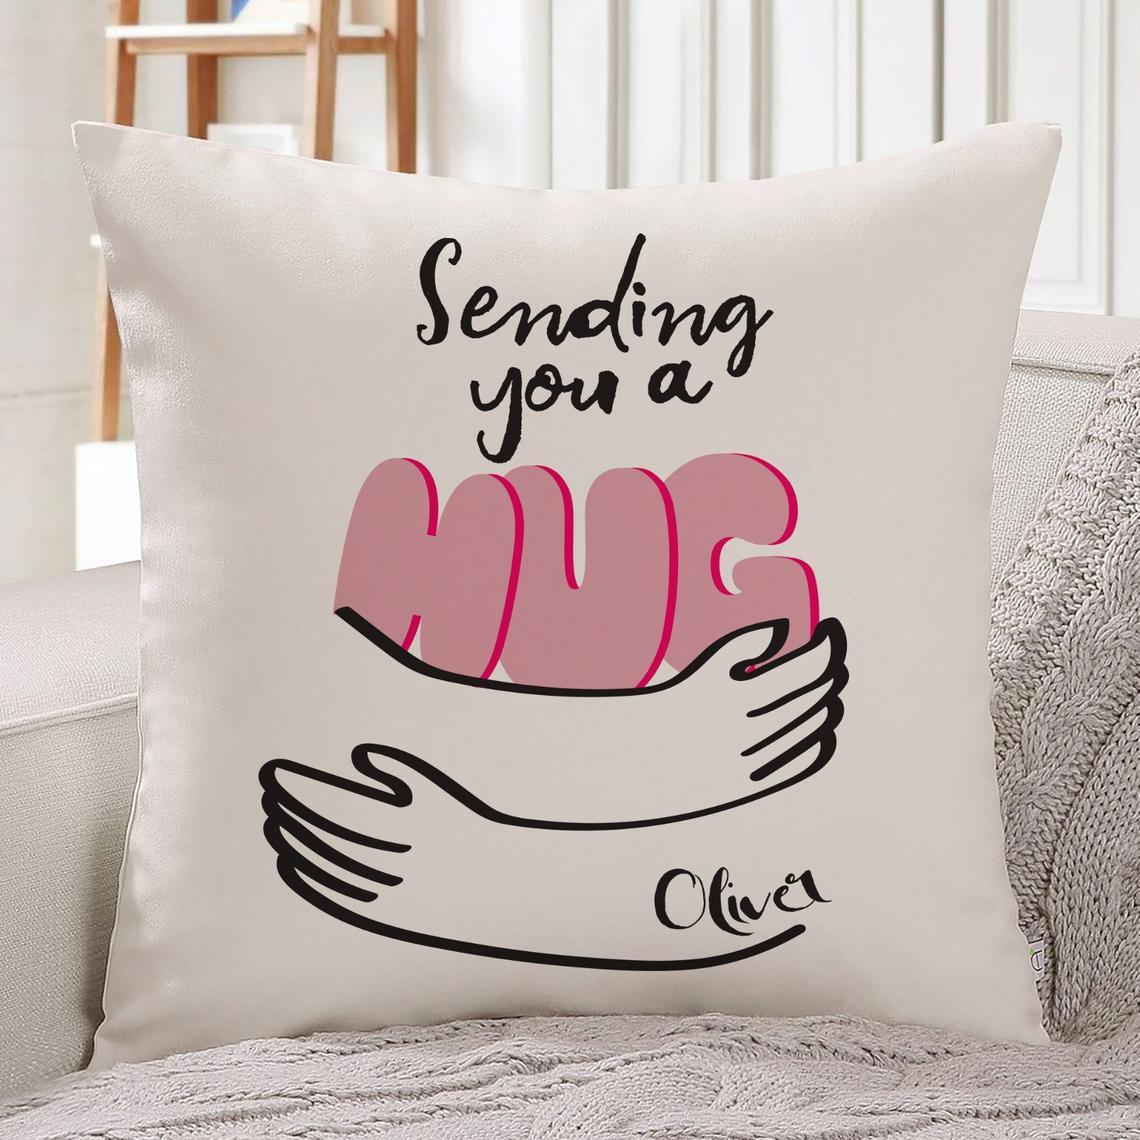 Sending you a hug cushion cover, Friends, soul sisters, auntie, grandma, mum gif